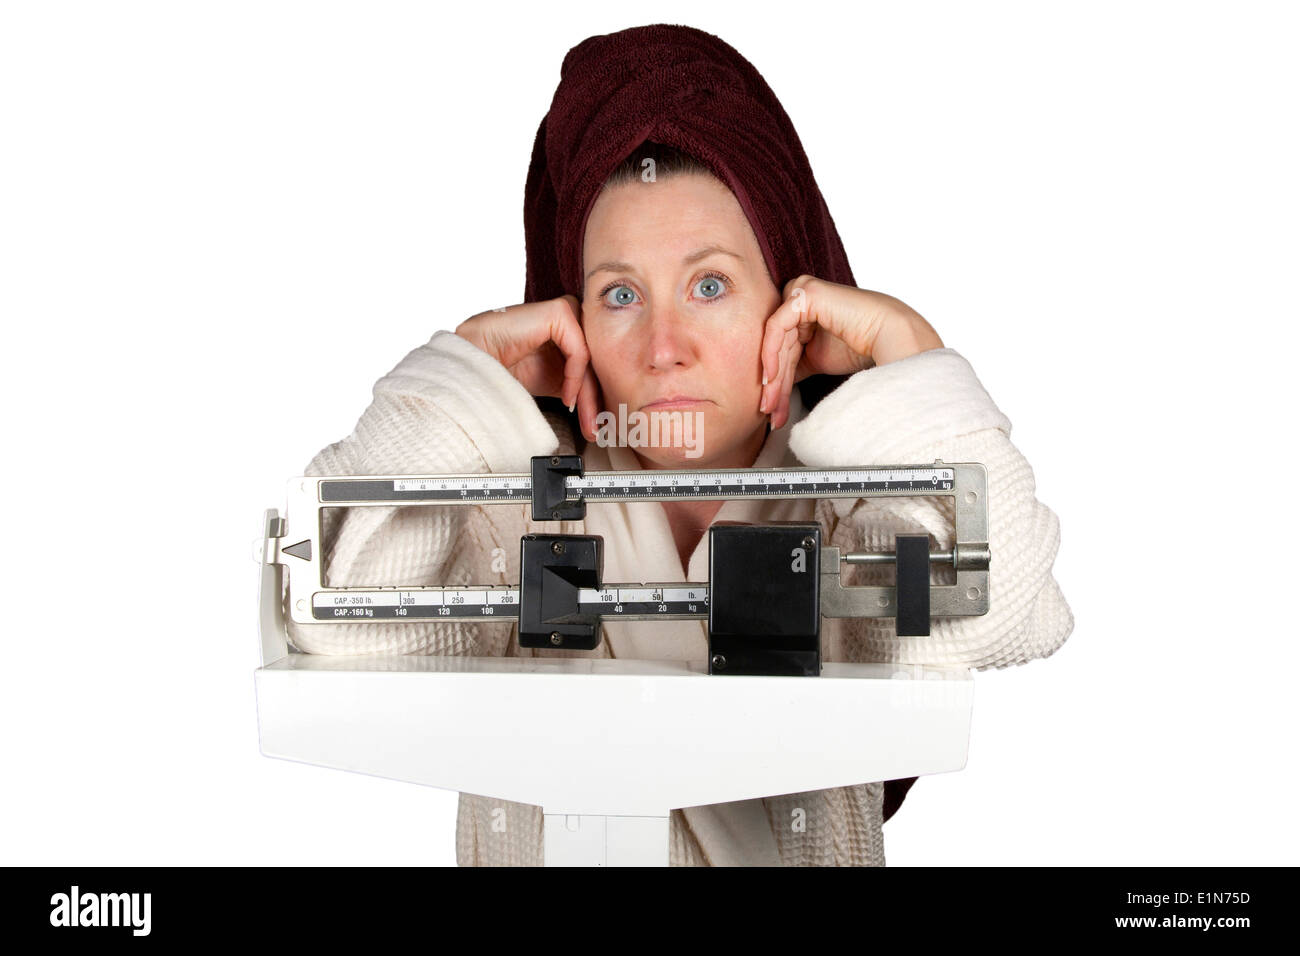 https://c8.alamy.com/comp/E1N75D/mature-woman-in-bathrobe-standing-on-a-bathroom-scale-looking-perplexed-E1N75D.jpg